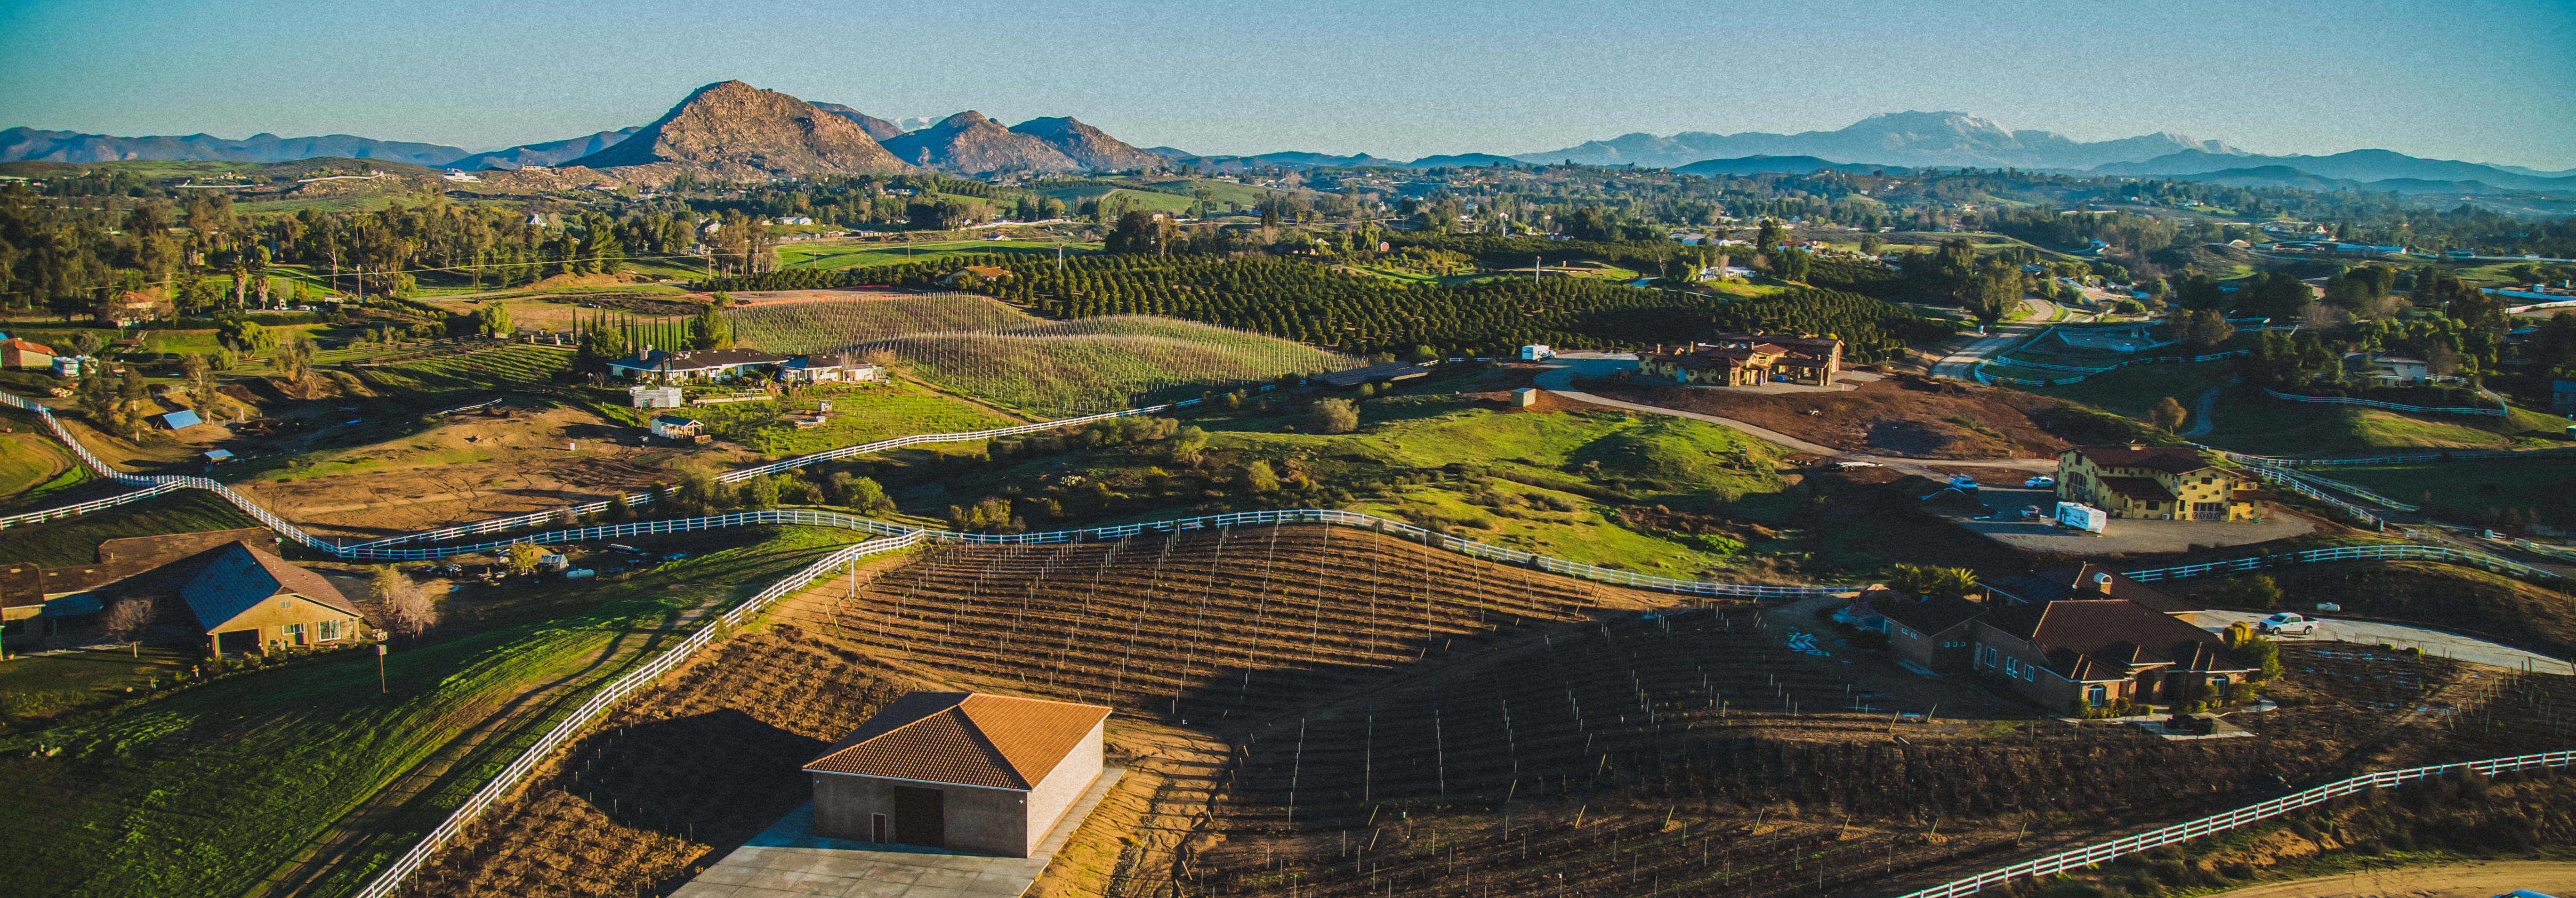 San Diego Winery